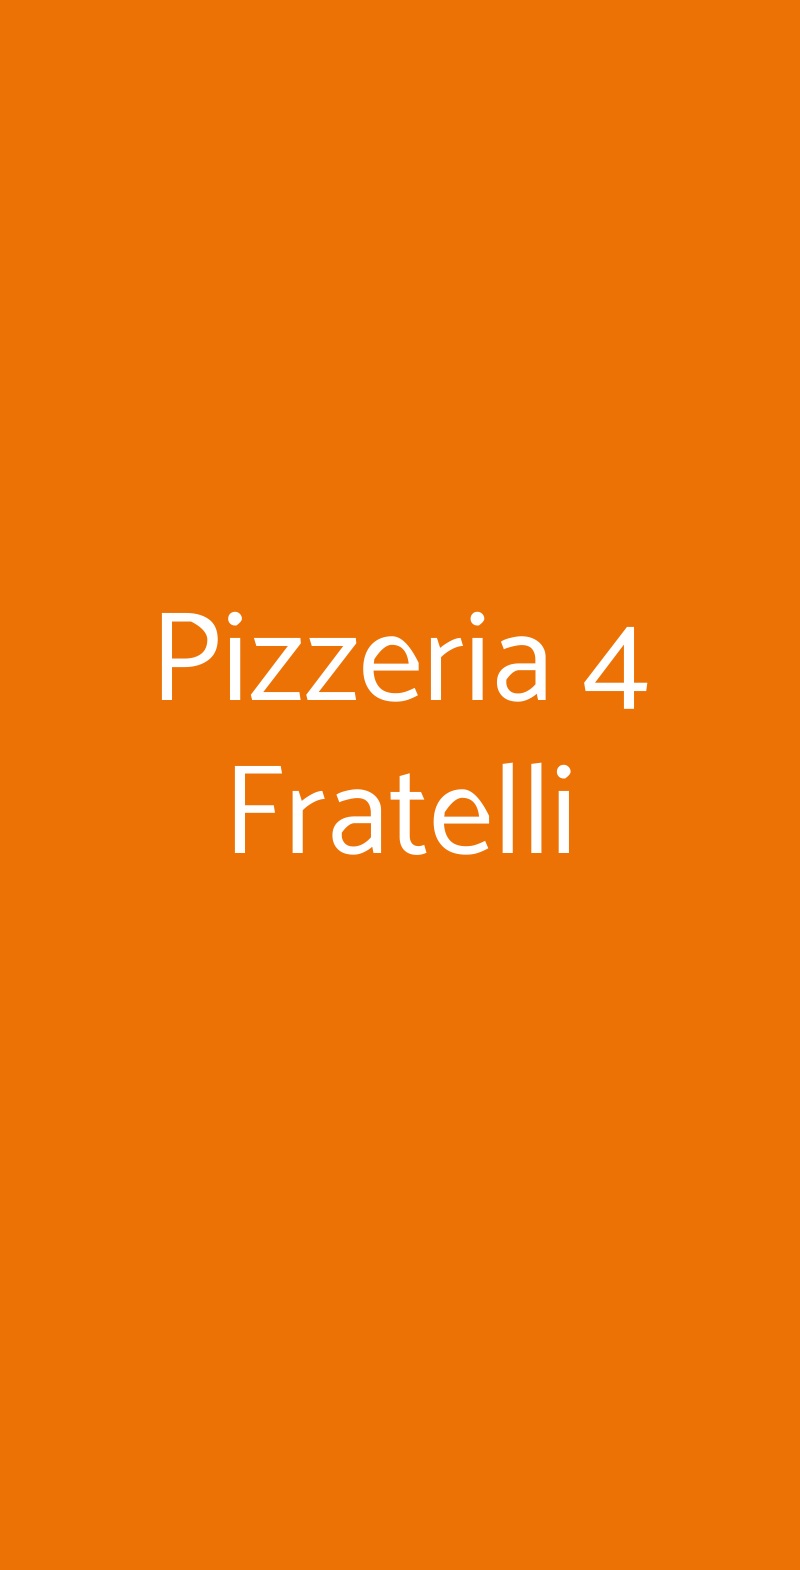 Pizzeria 4 Fratelli Milano menù 1 pagina